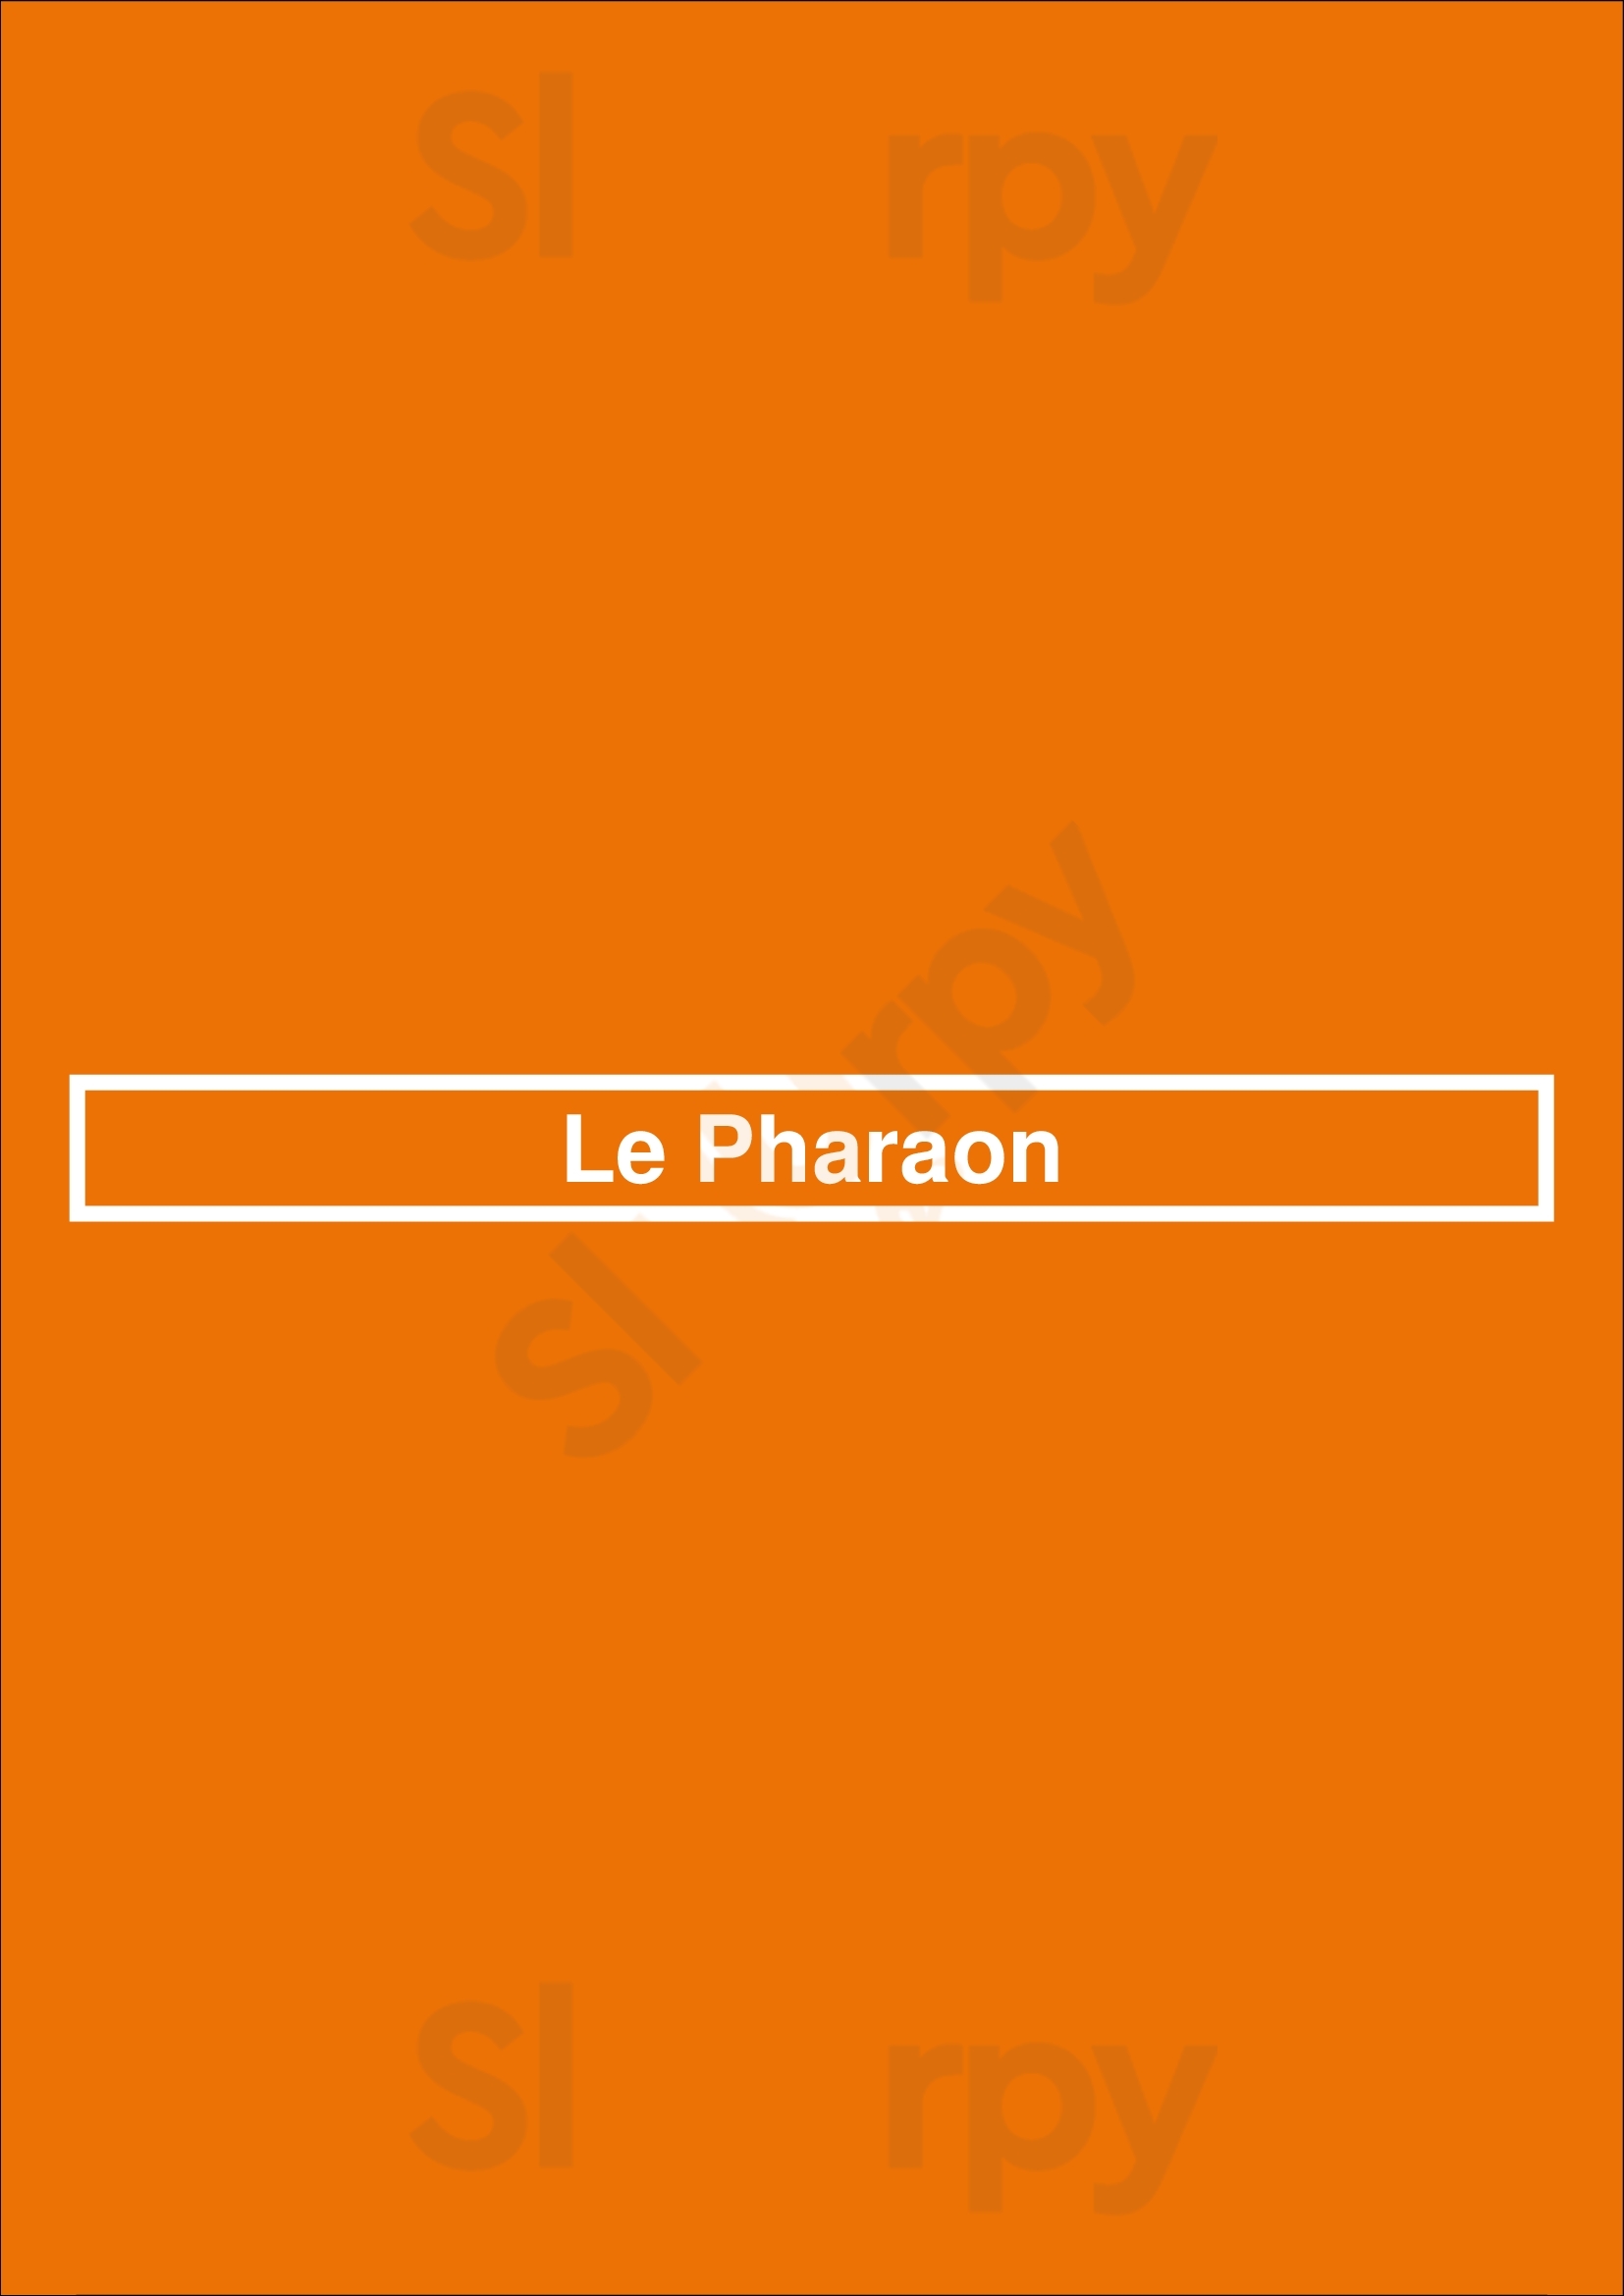 Le Pharaon Dijon Menu - 1